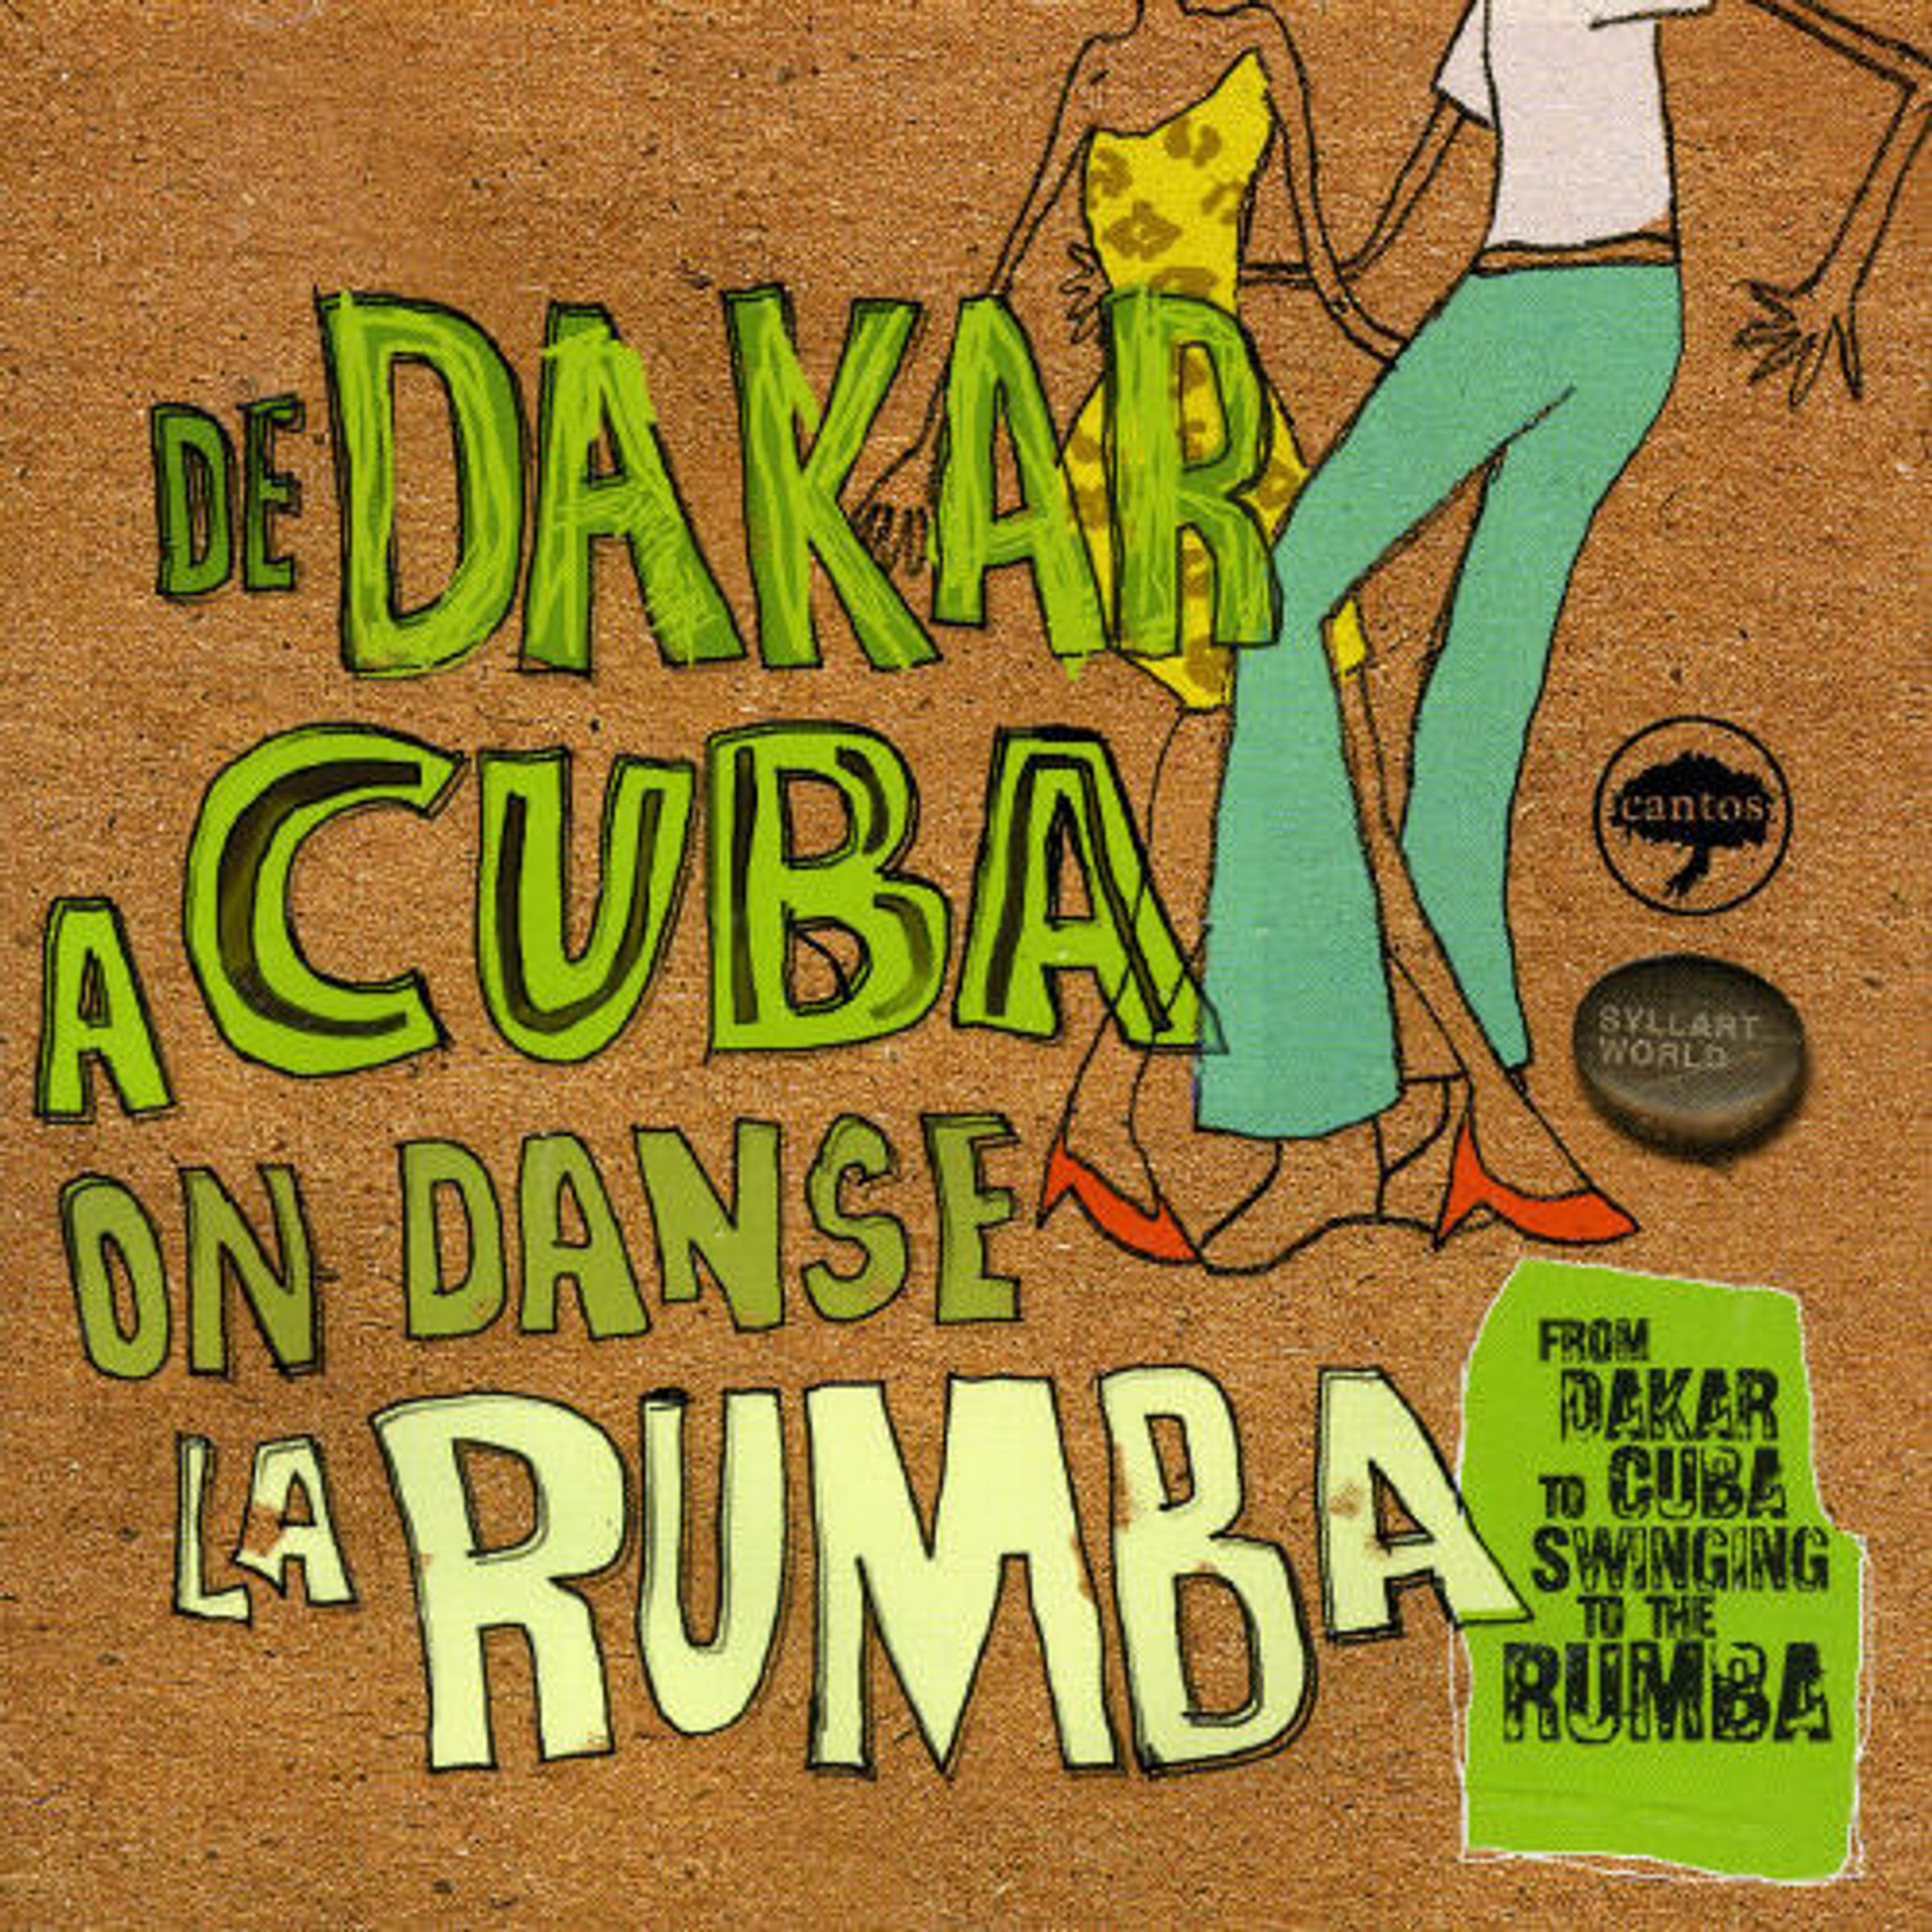 FROM DAKAR TO CUBA - SWINGING TO THE RUMBA